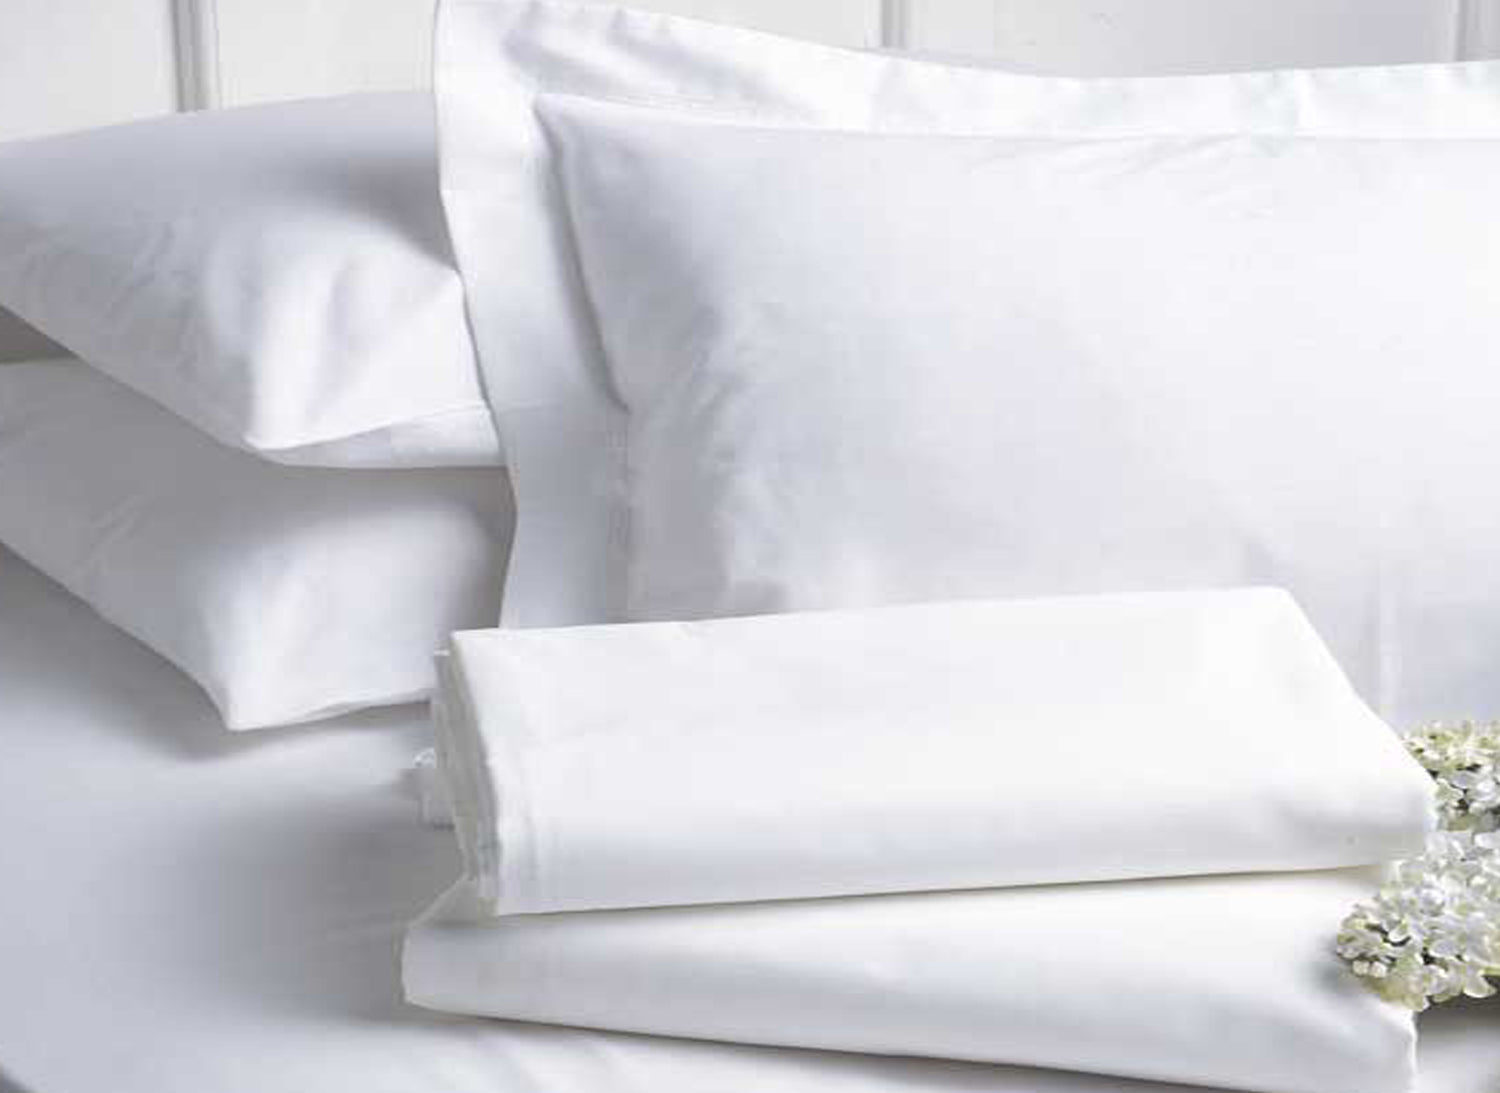 Luxury hotel pillow